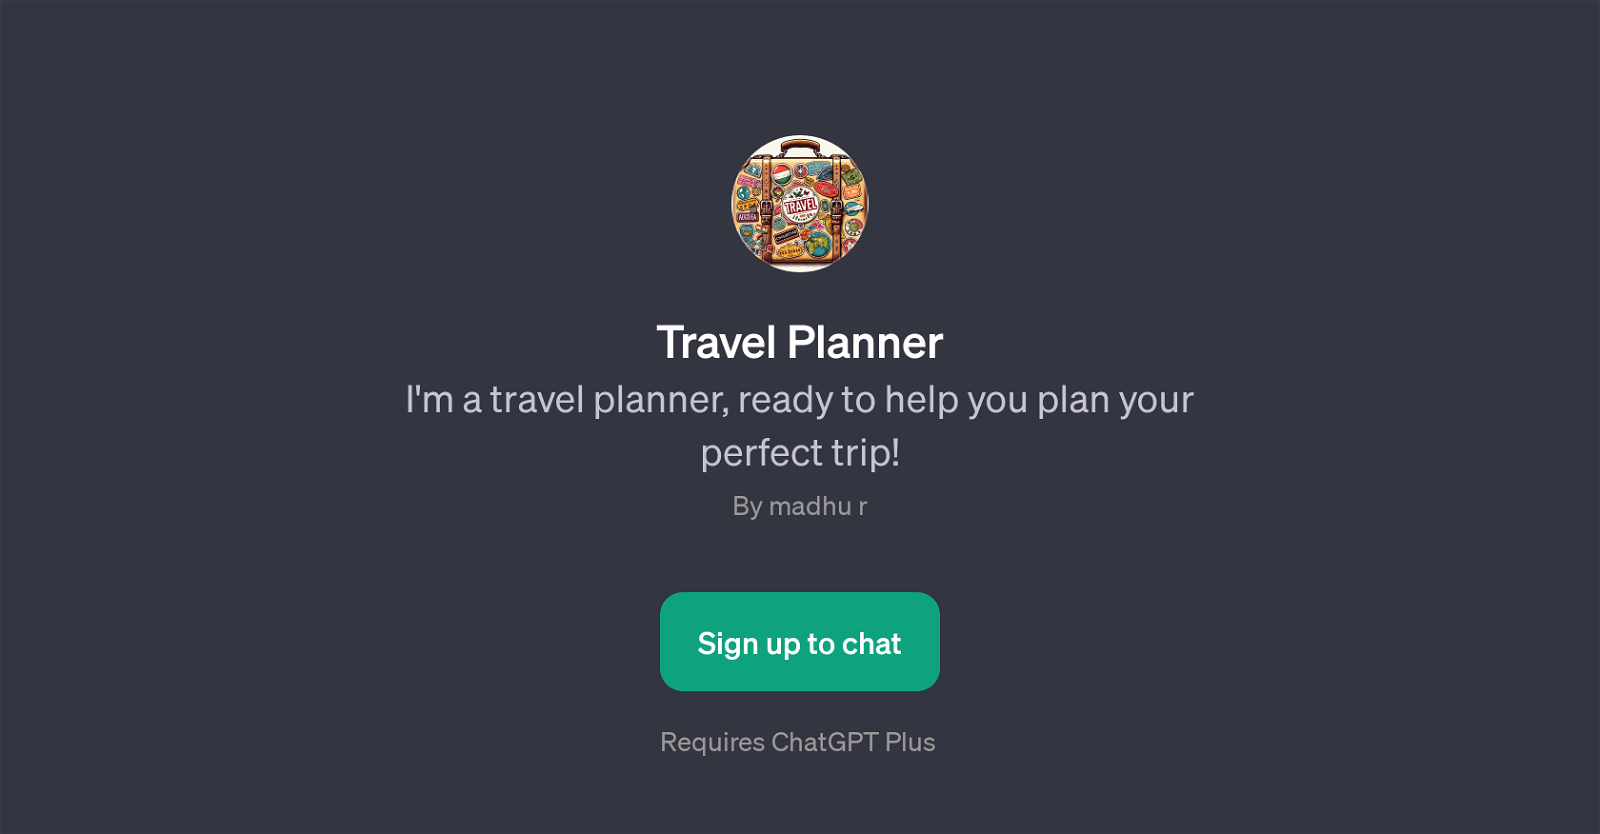 Travel Planner website